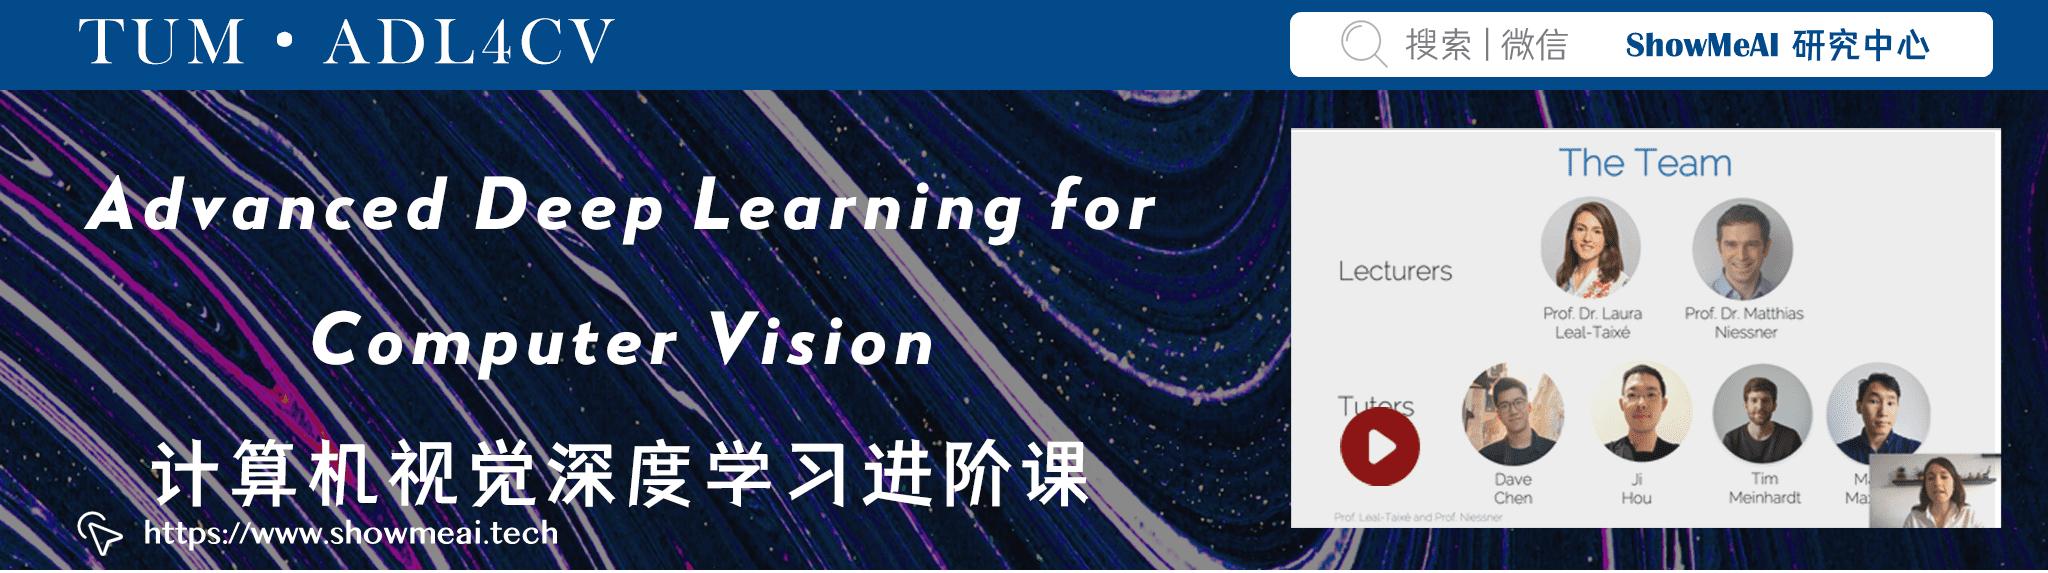 ADL4CV; Advanced Deep Learning for Computer Vision; 計算機視覺深度學習進階課